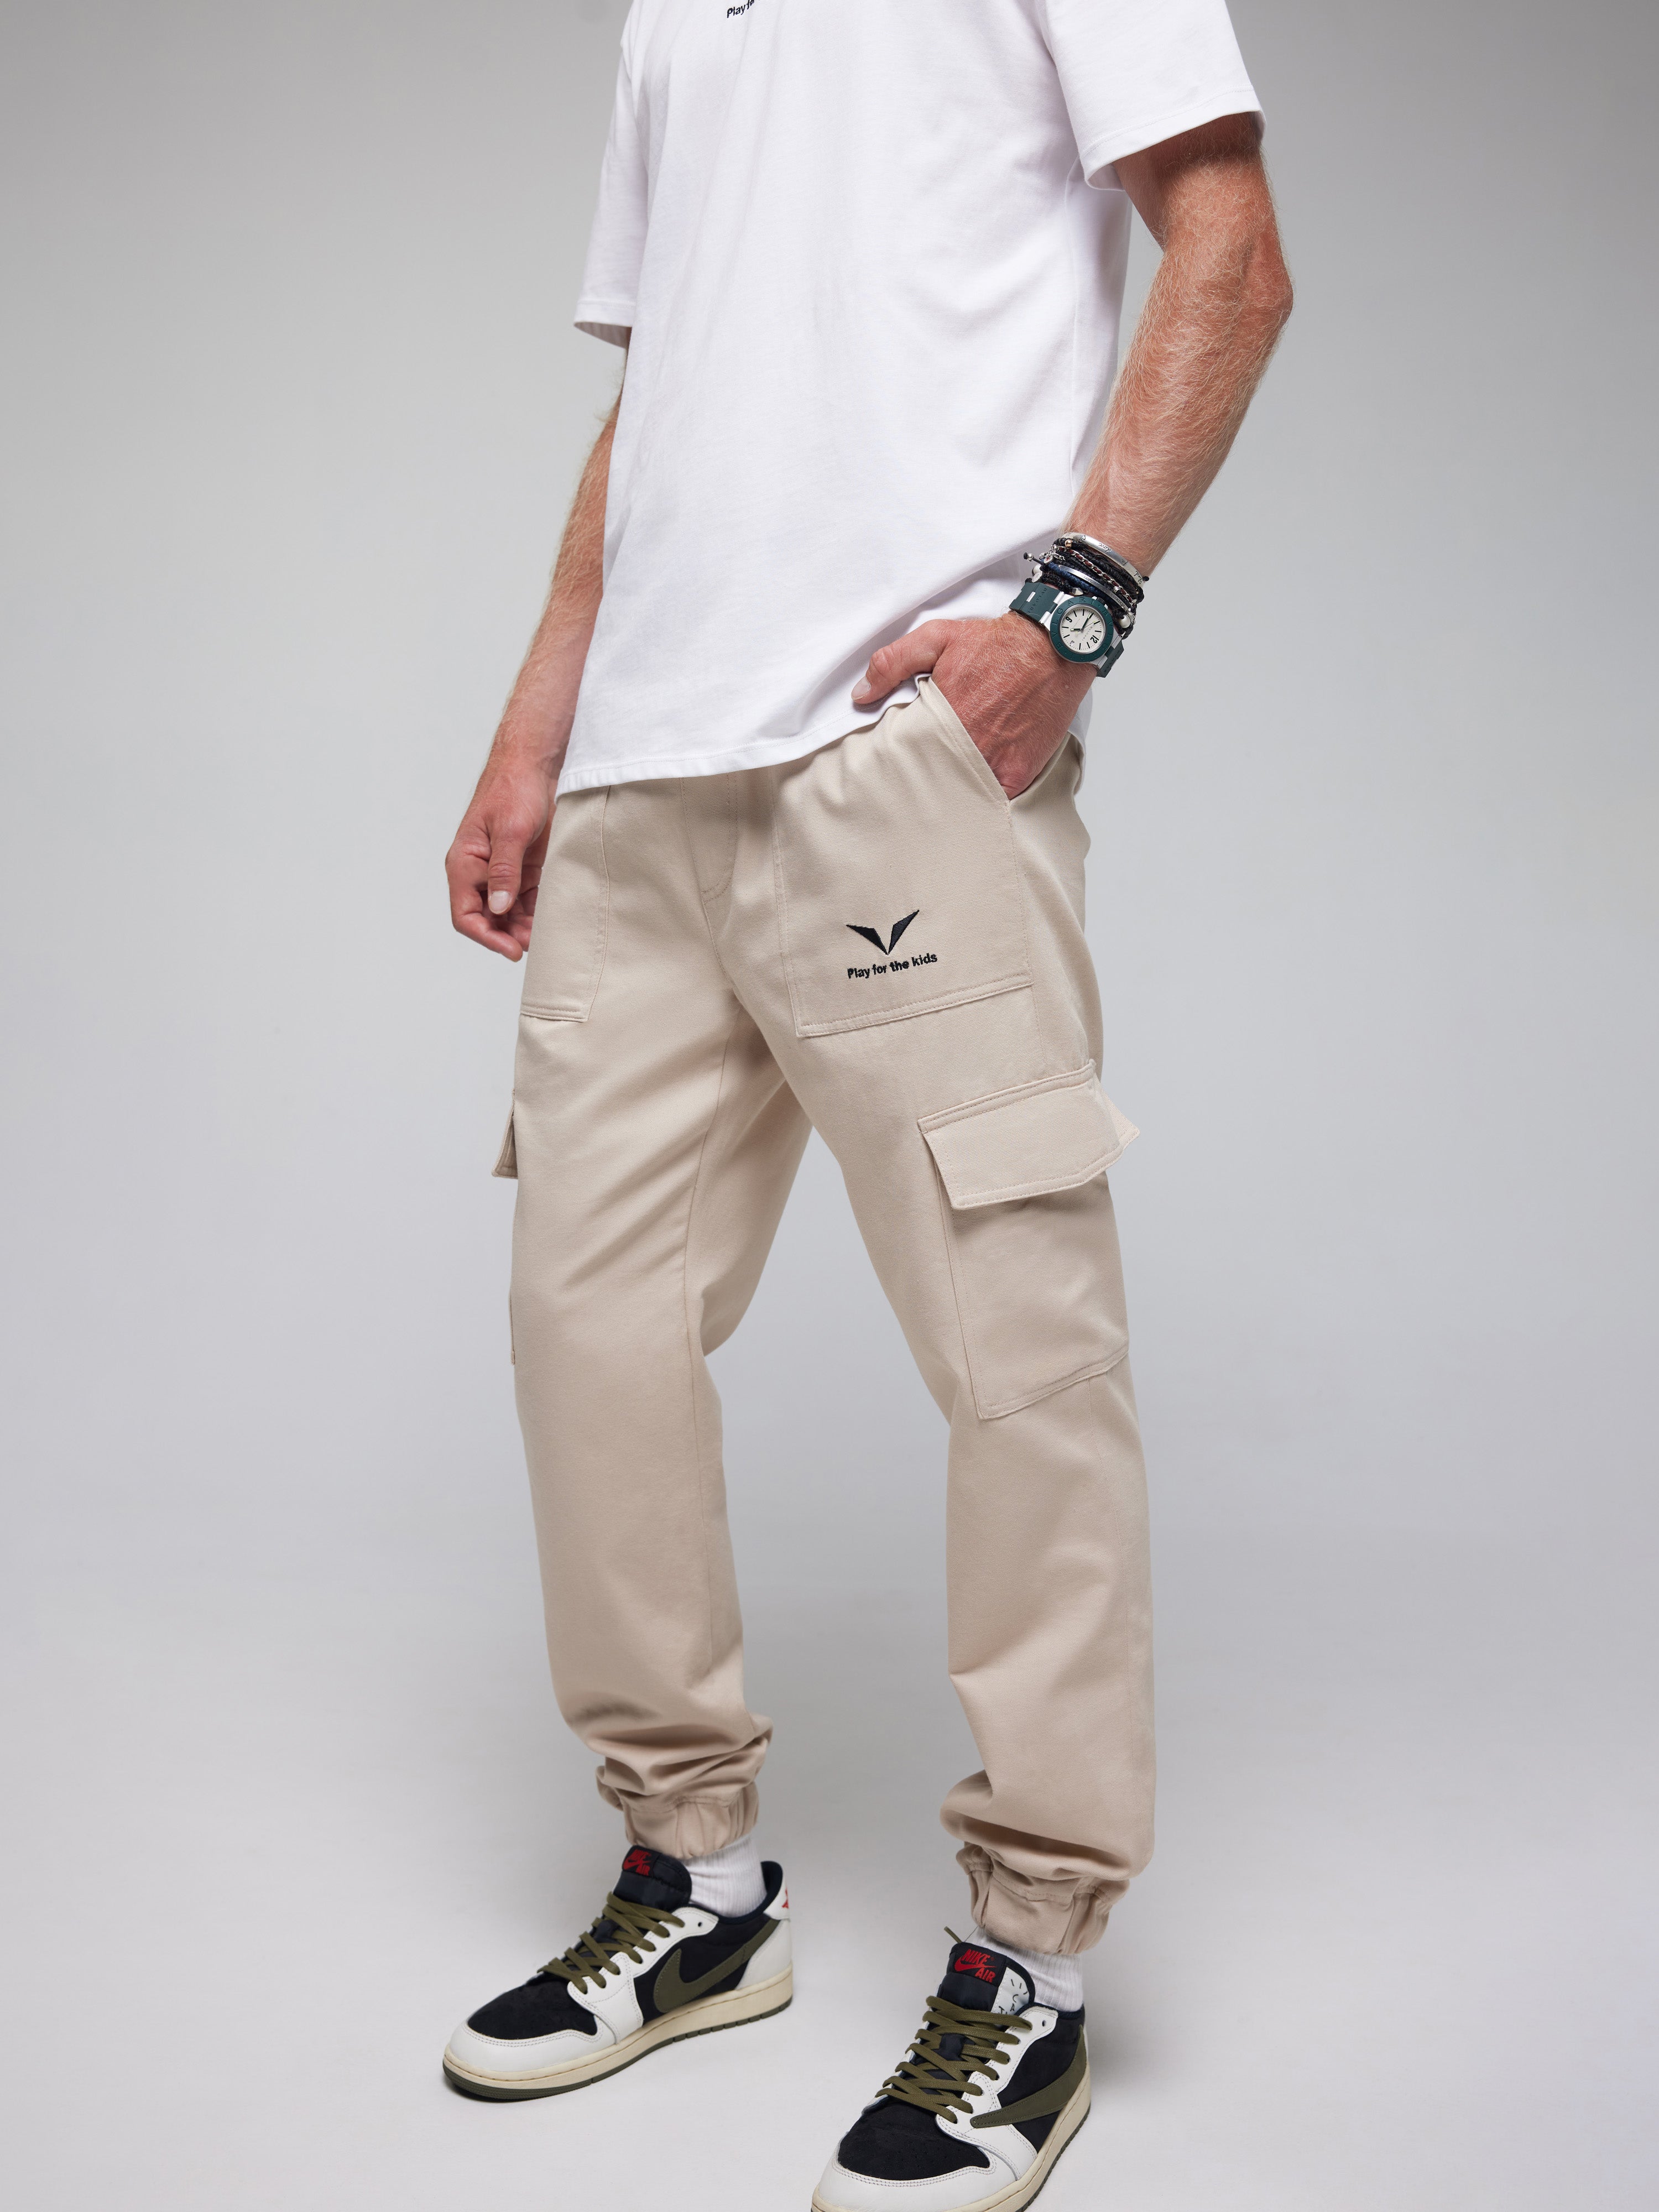 Cargo Pants Style Trend for Men ⋆ Best Fashion Blog For Men -  TheUnstitchd.com